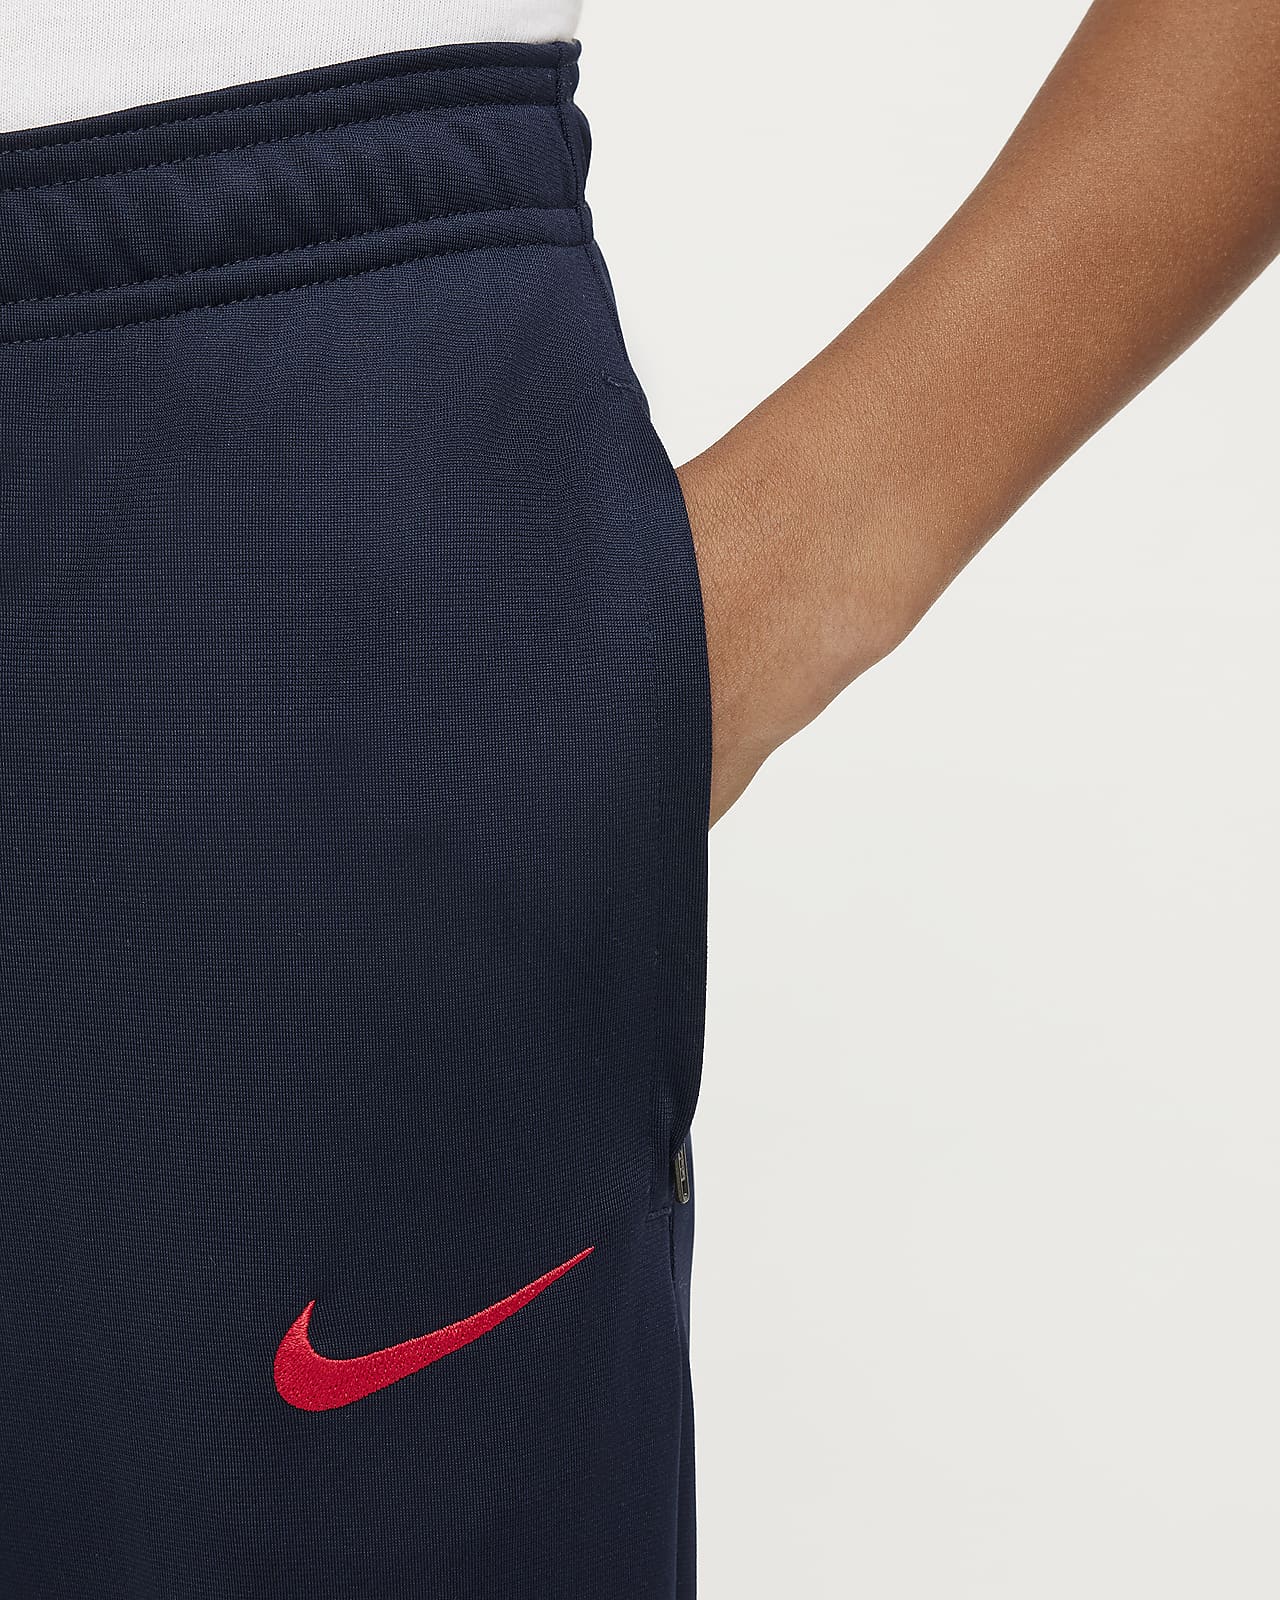 Detectable claramente cortina FC Barcelona Strike Chándal de fútbol de tejido Knit Nike Dri-FIT - Niño/a.  Nike ES